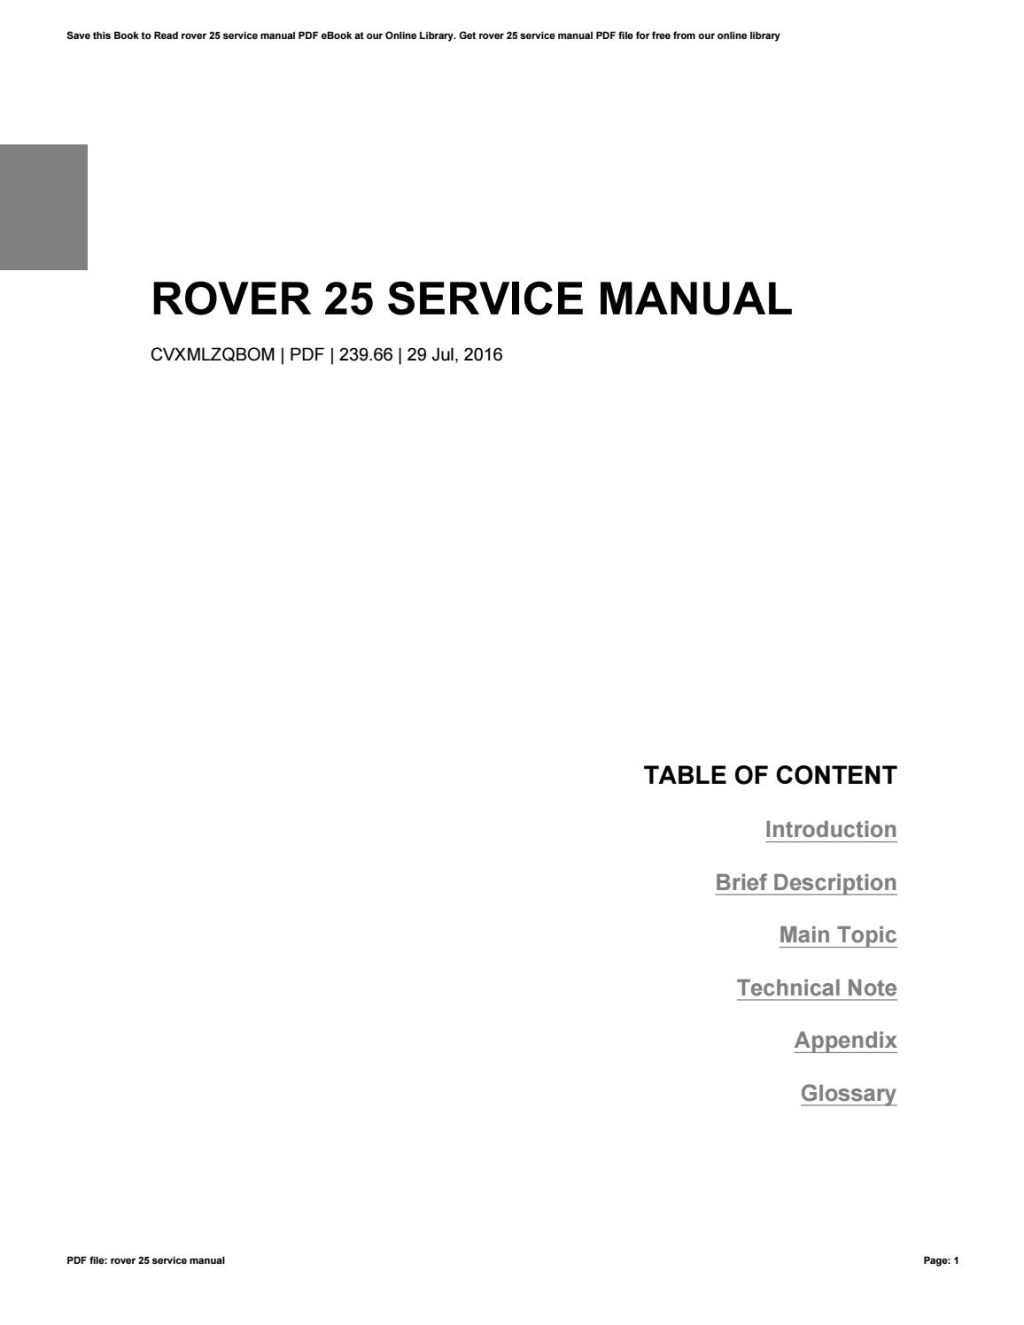 Rover  service manual by u7 - Issuu